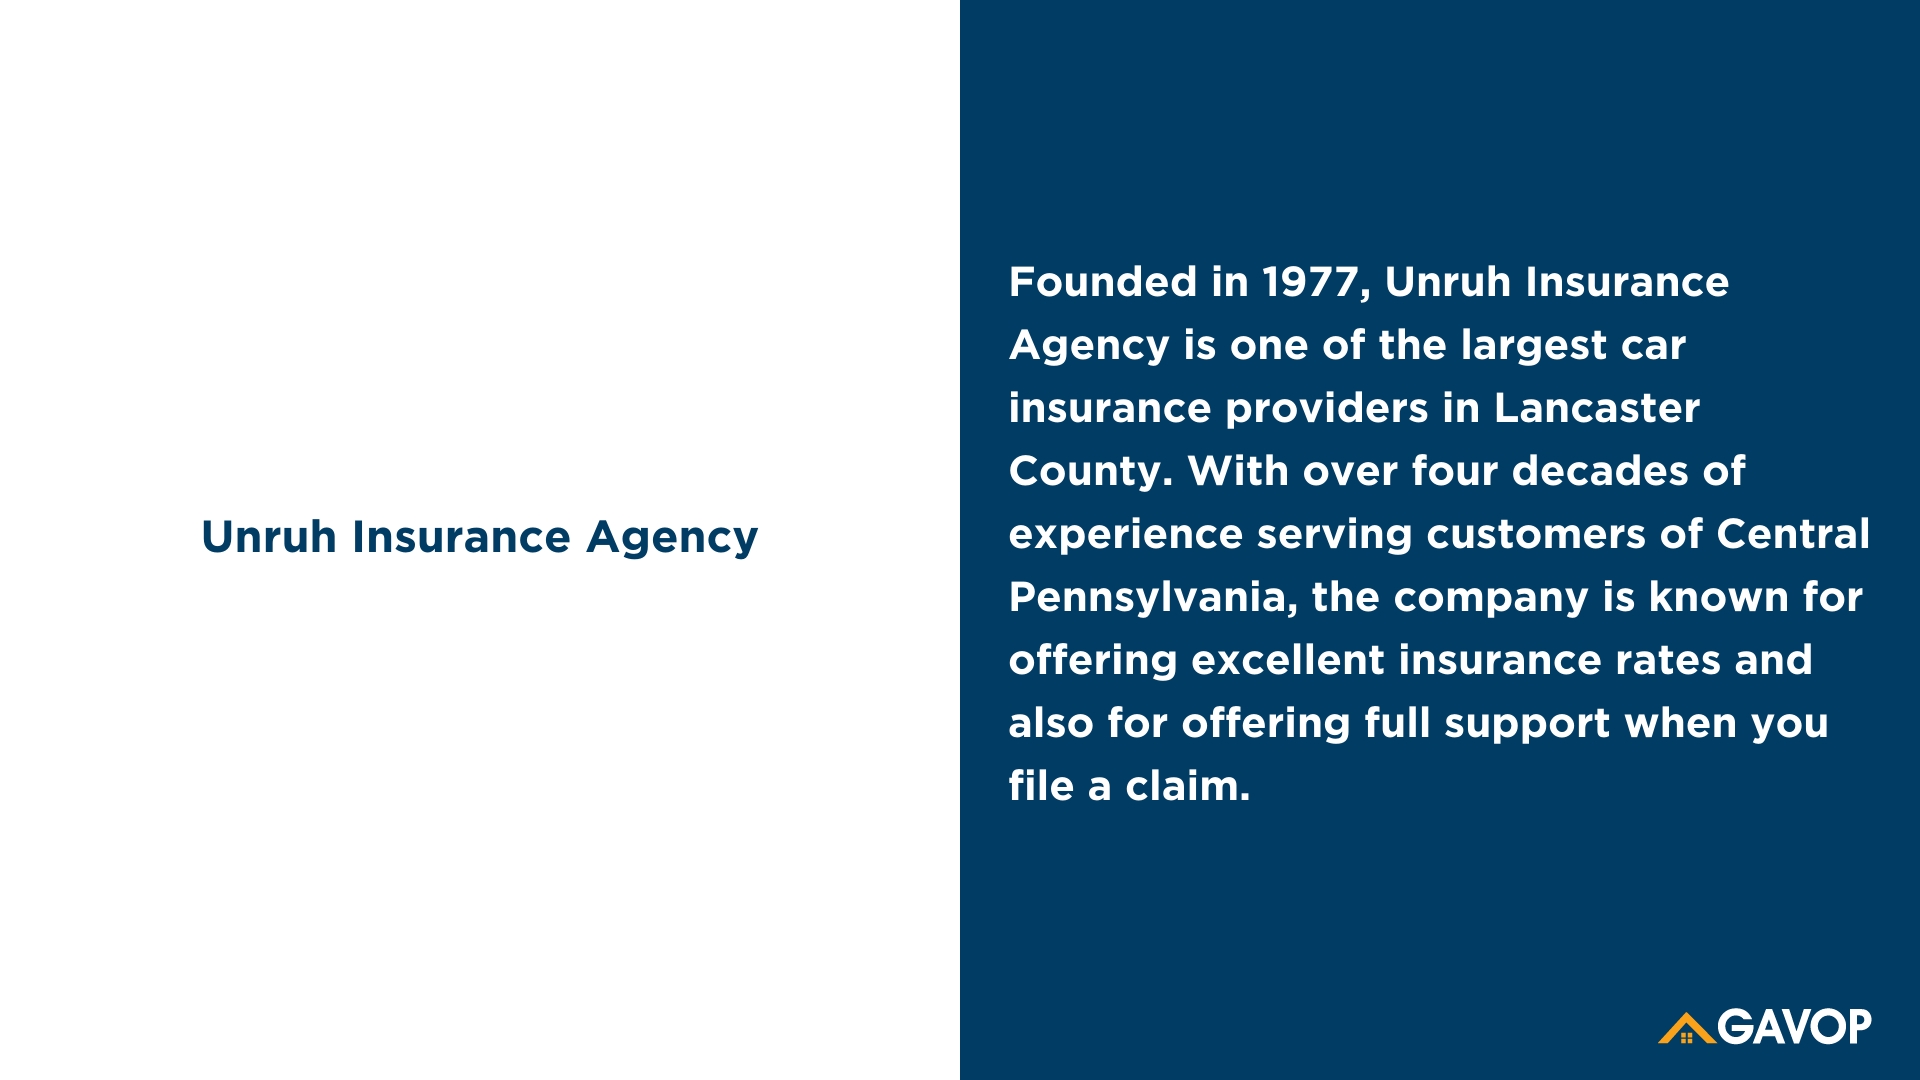 Unruh Insurance Agency